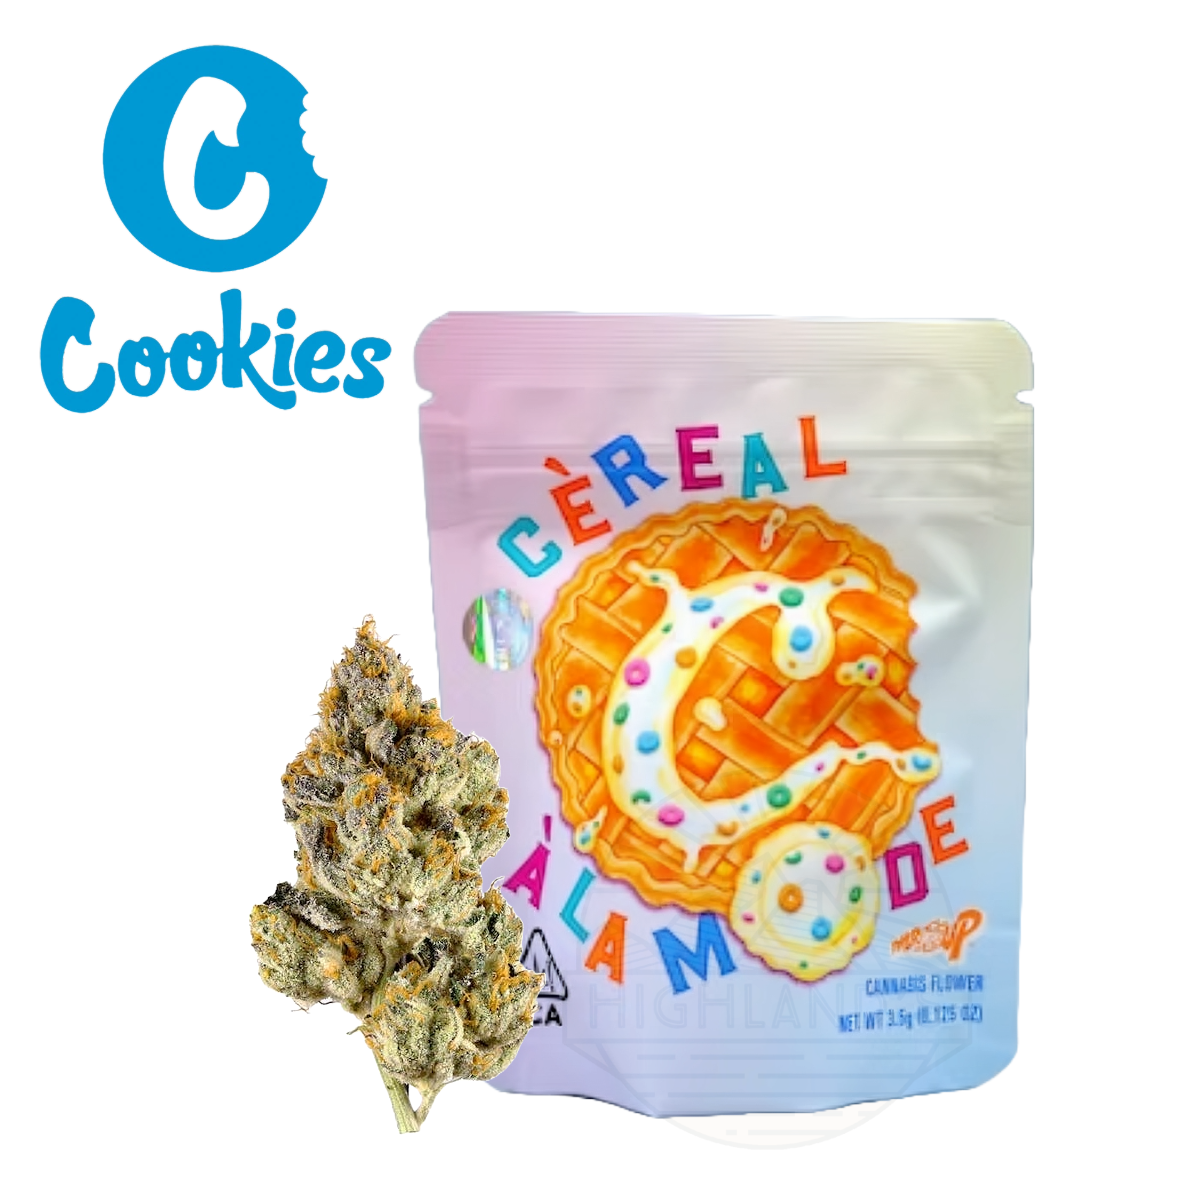 Cookies - Cereal A La Mode